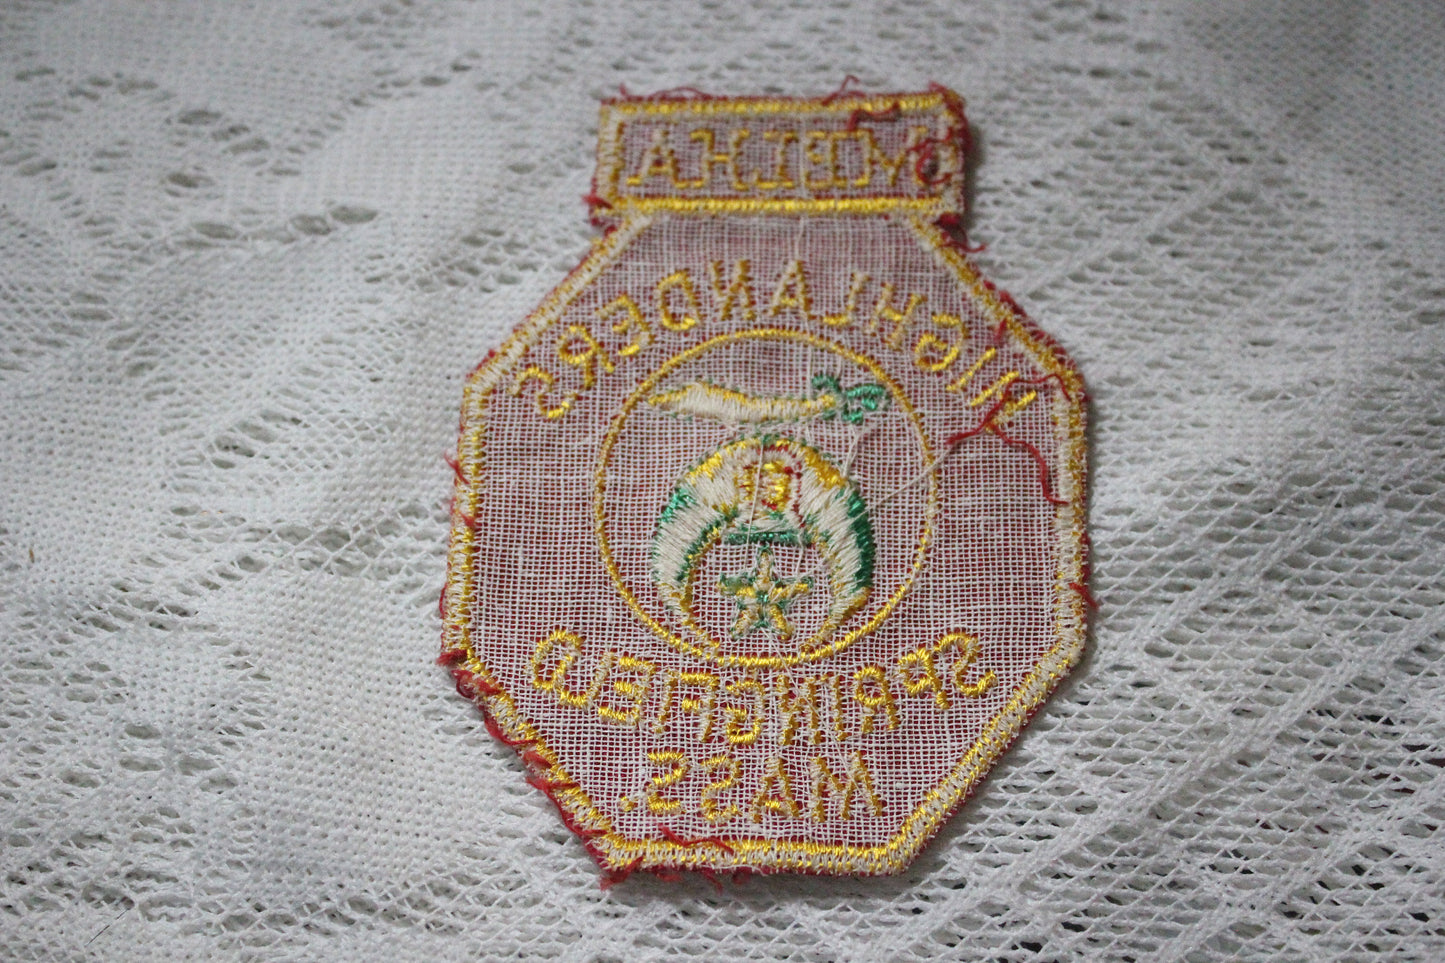 Melha Highlanders Shriners Embroidered Patch, Springfield, Massachusetts